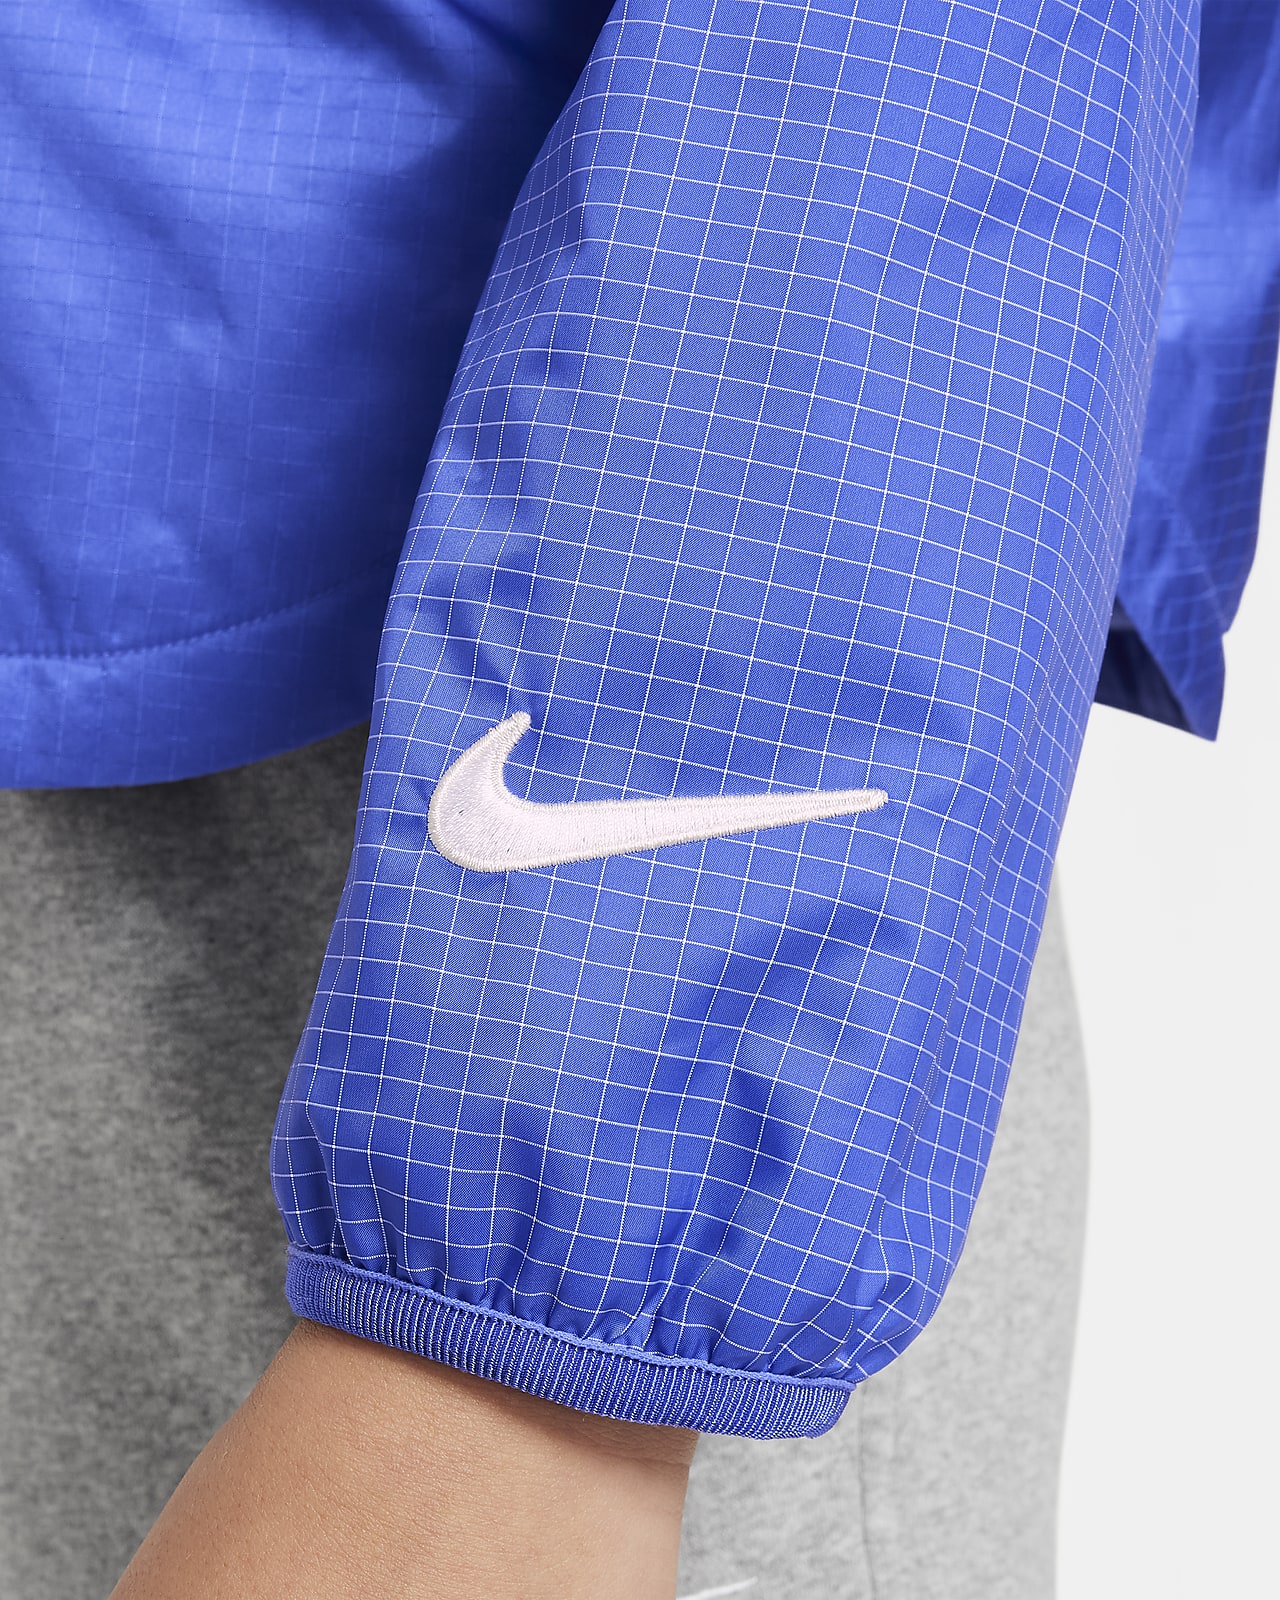 Nike Sportswear Therma-FIT Repel Big Kids\' (Girls\') Shirt-Jacket.